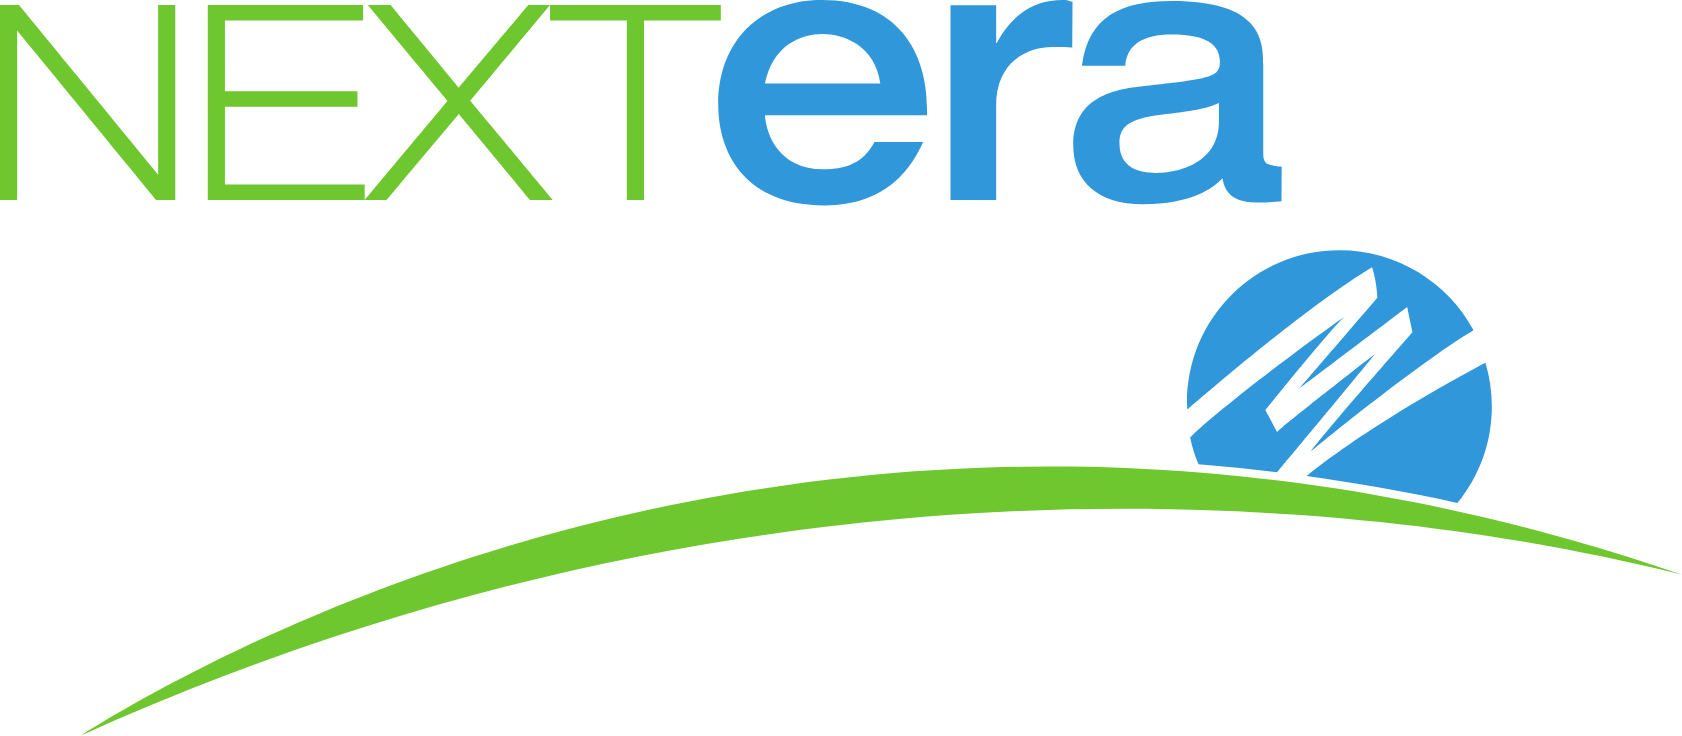 Nextera Energy logo large for dark backgrounds (transparent PNG)